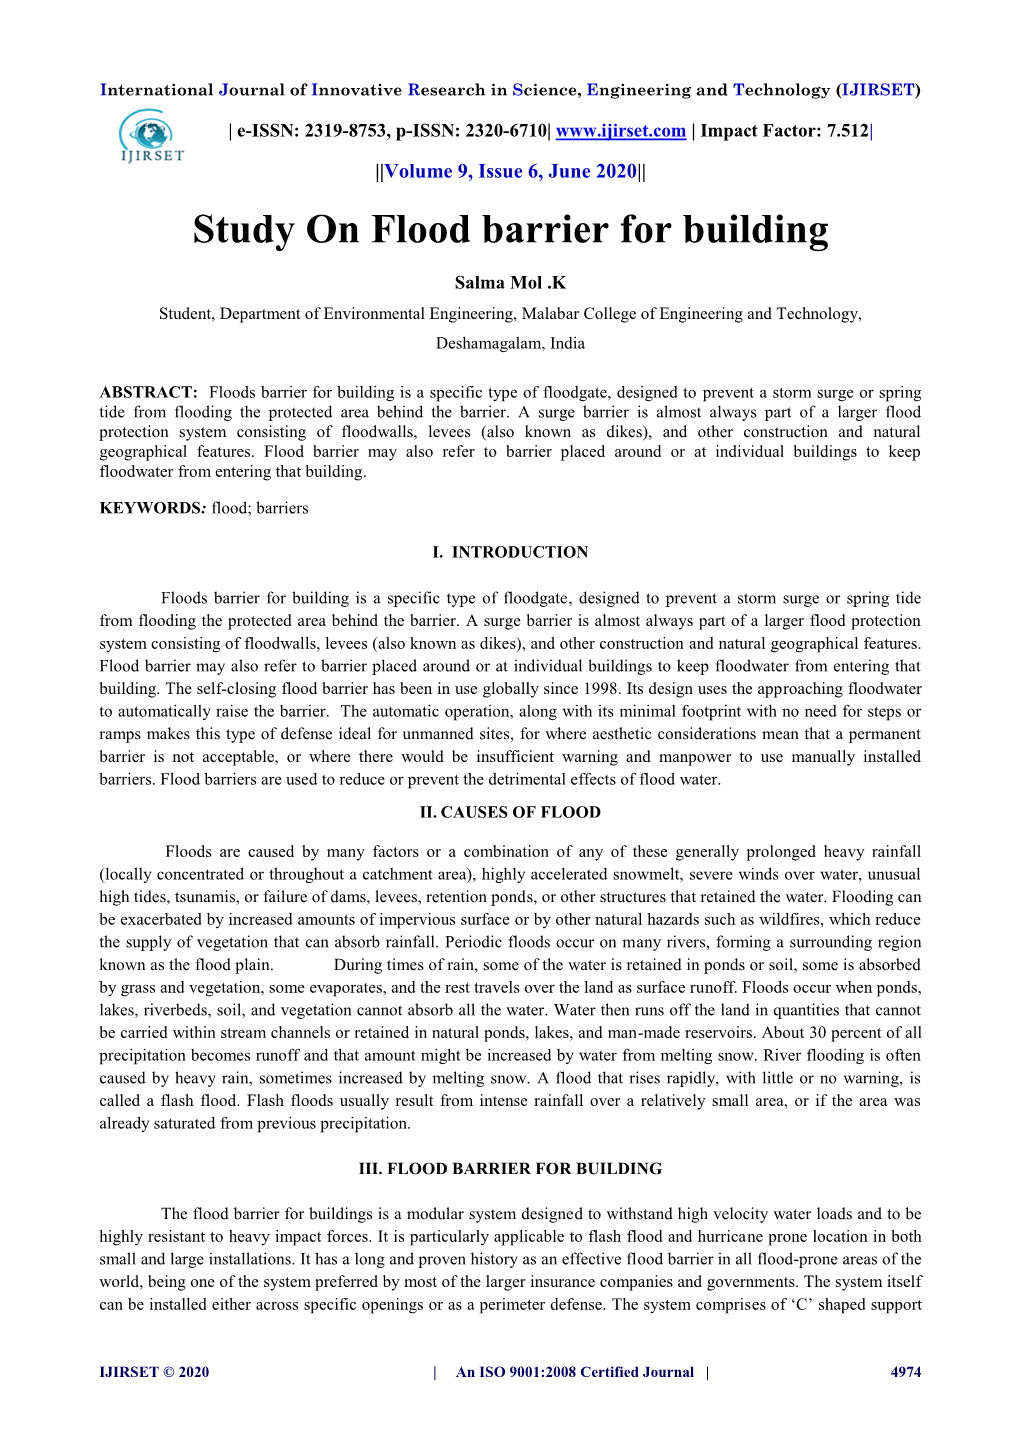 Study on Flood Barrier for Building